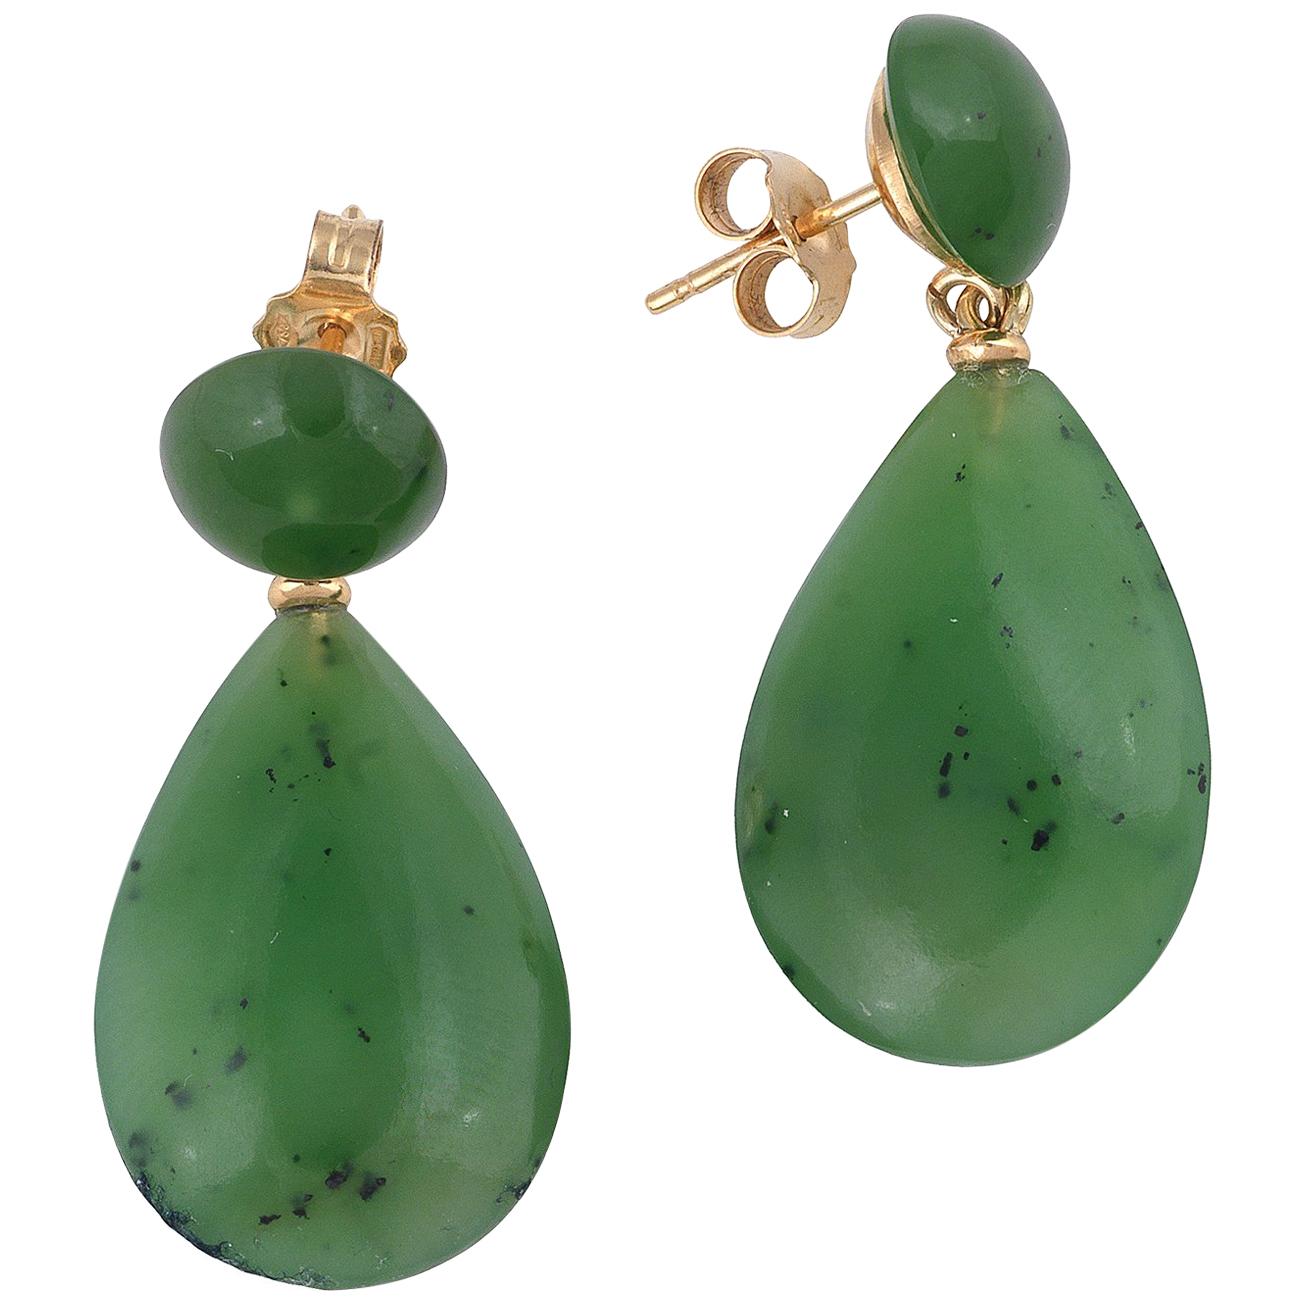 Pair of Jade and Gold Pendant Earrings